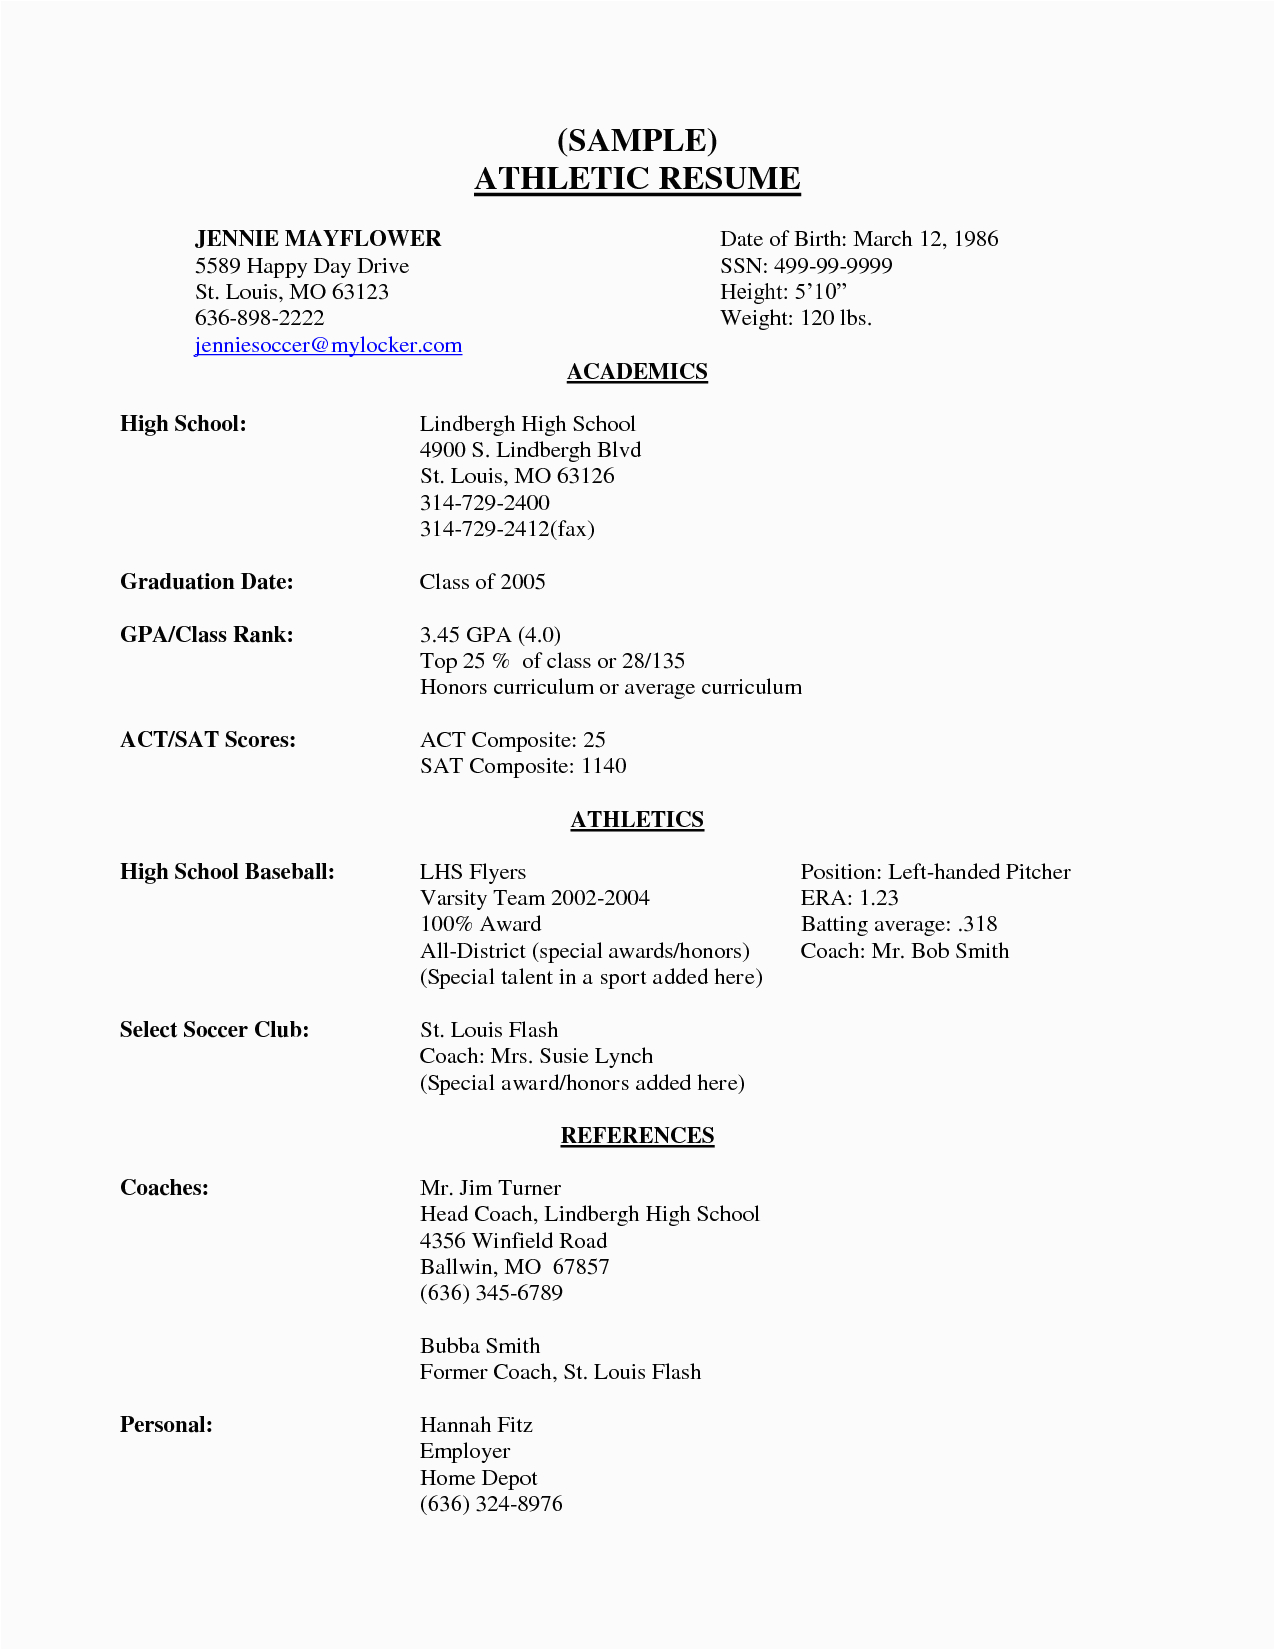 Resume Sample for Senior High School Students Sample athletic Resume